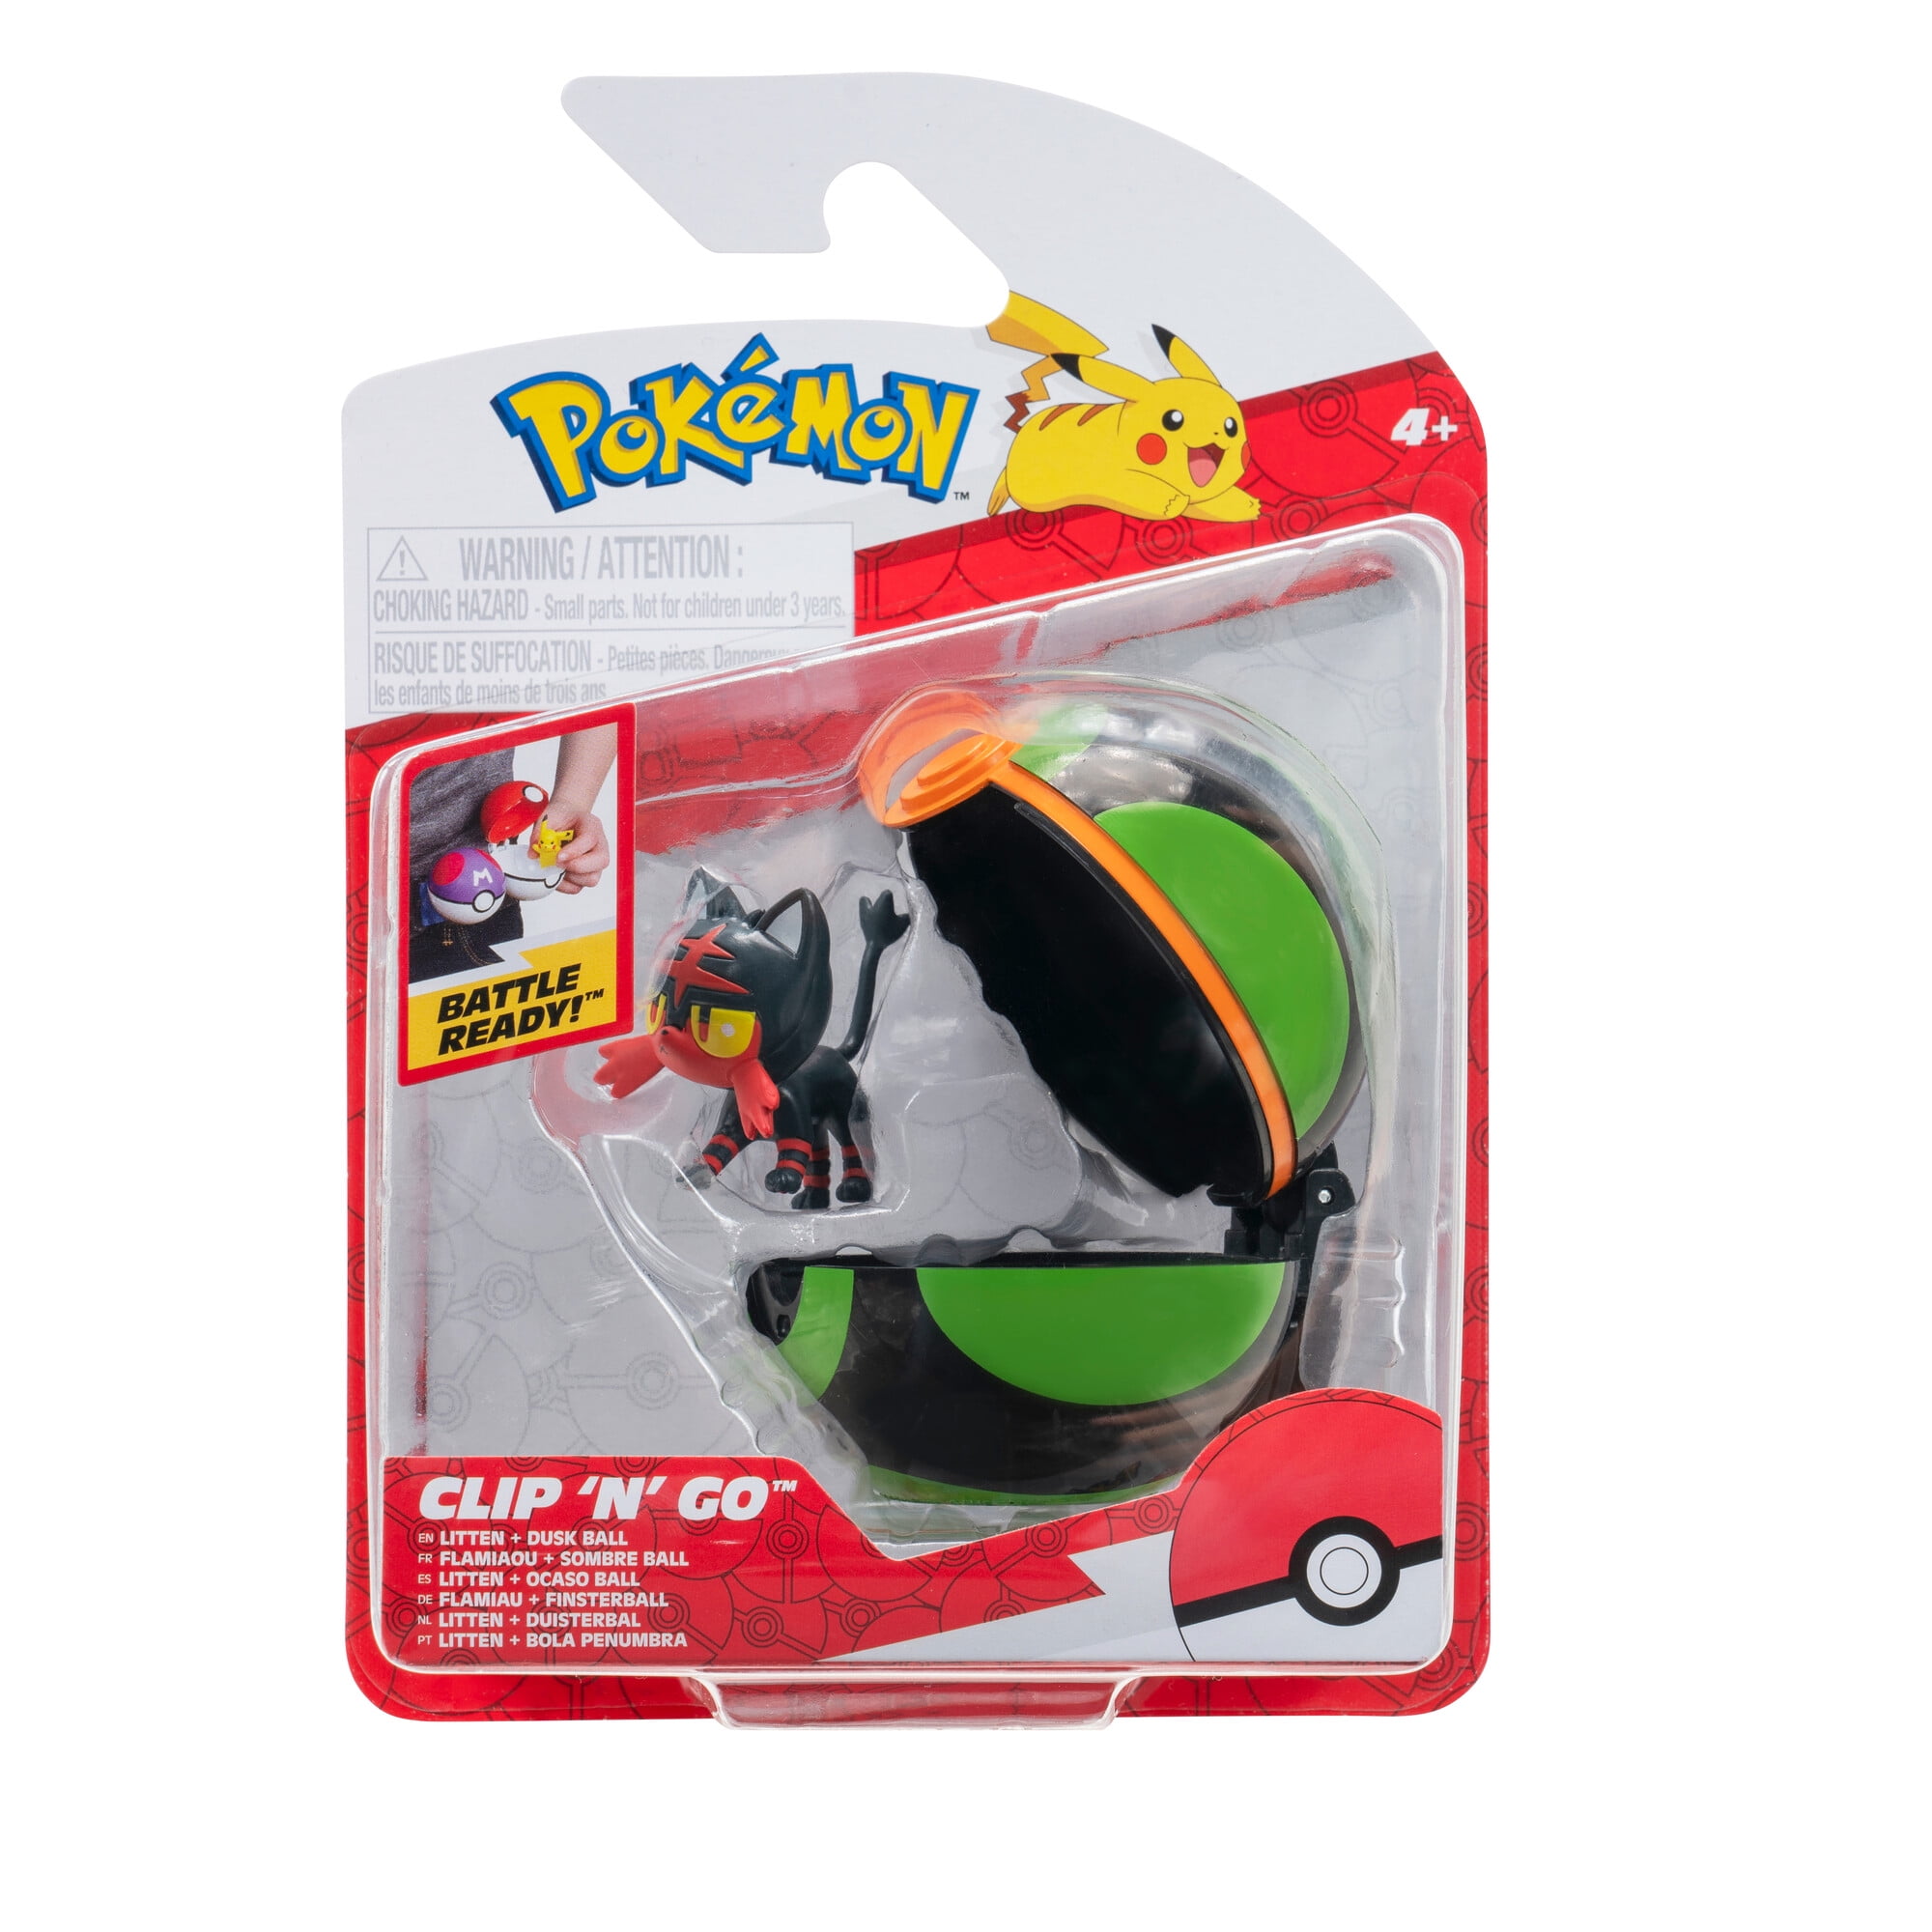 Pokemon Clip 'N' Go Assortment - Includes 2 inch Litten Battle Figure ...